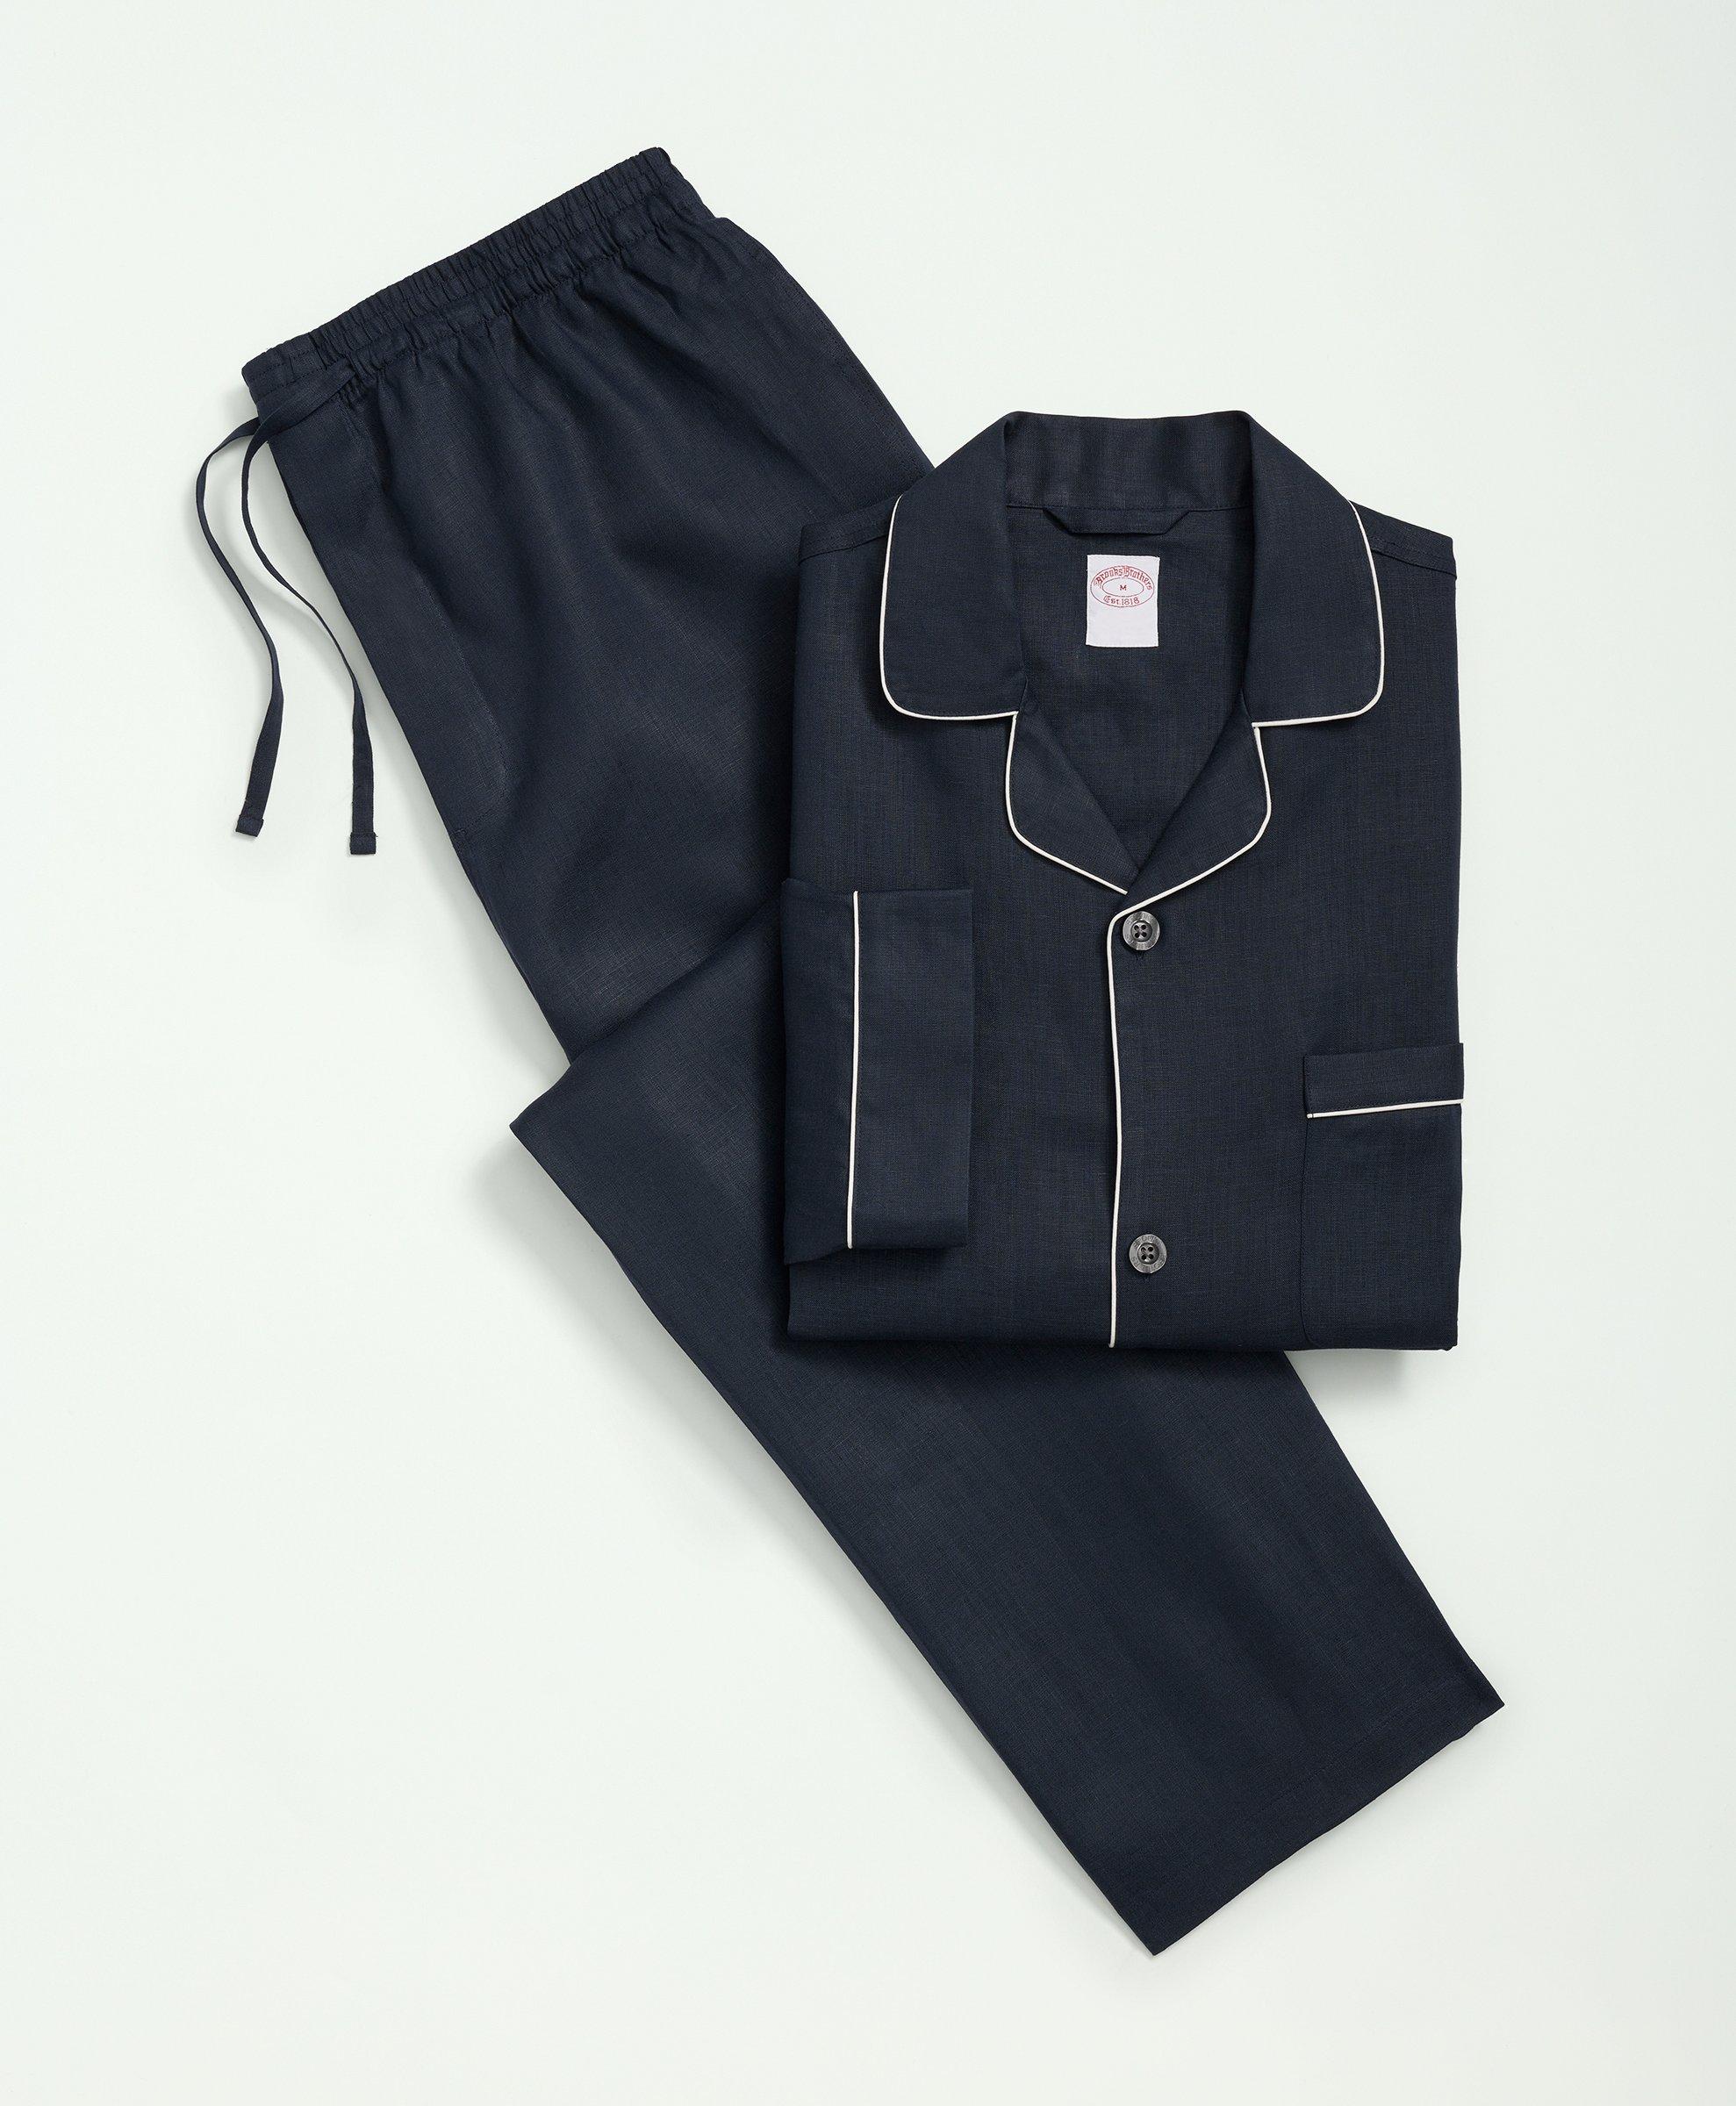 Men's Polo Ralph Lauren Pajamas, Loungewear & Robes